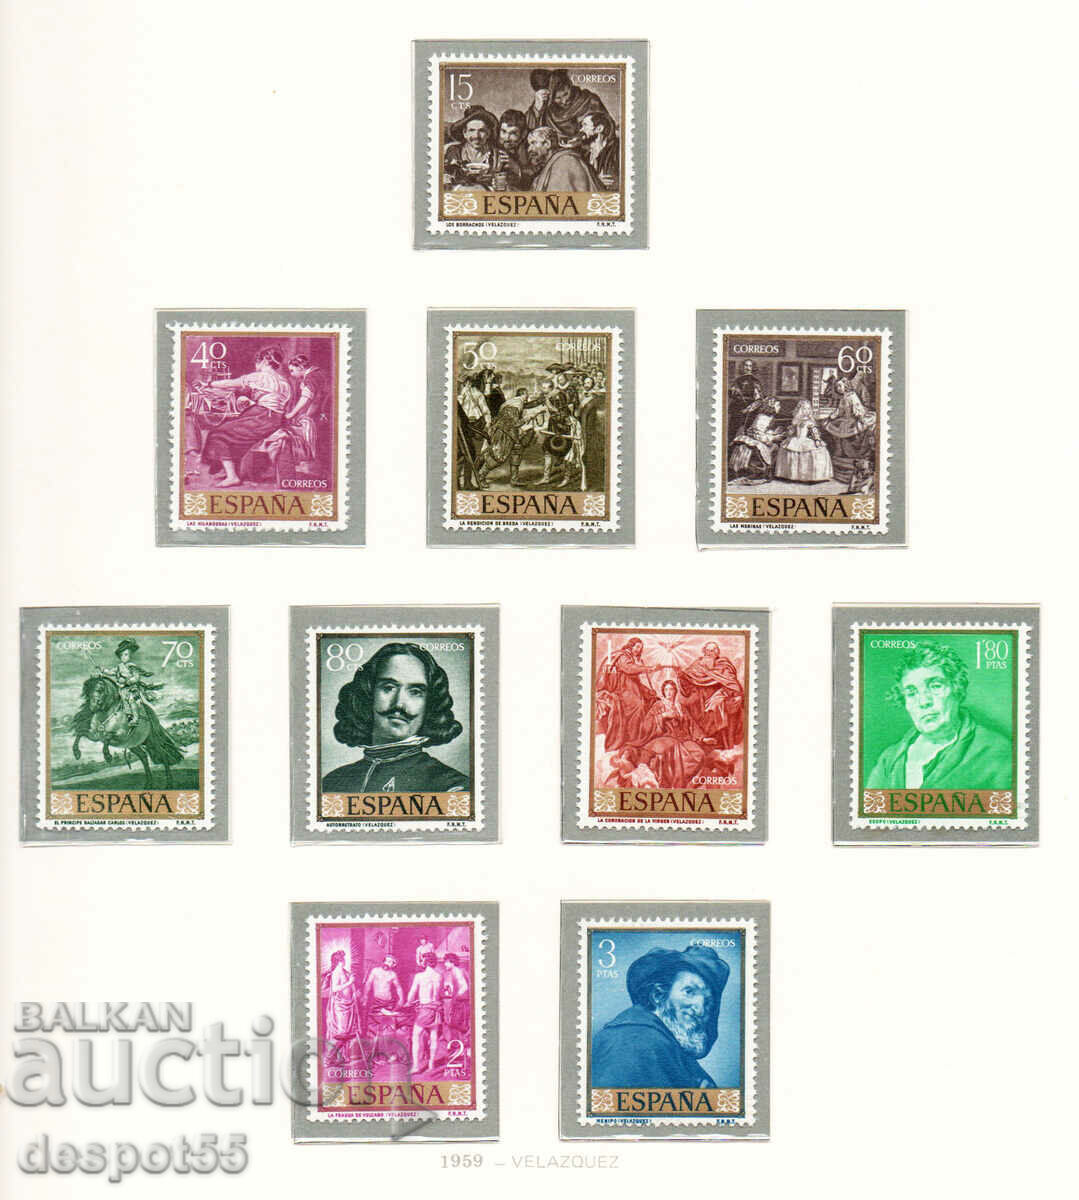 1959. Spania. Ziua timbrului poștal - Velazquez.